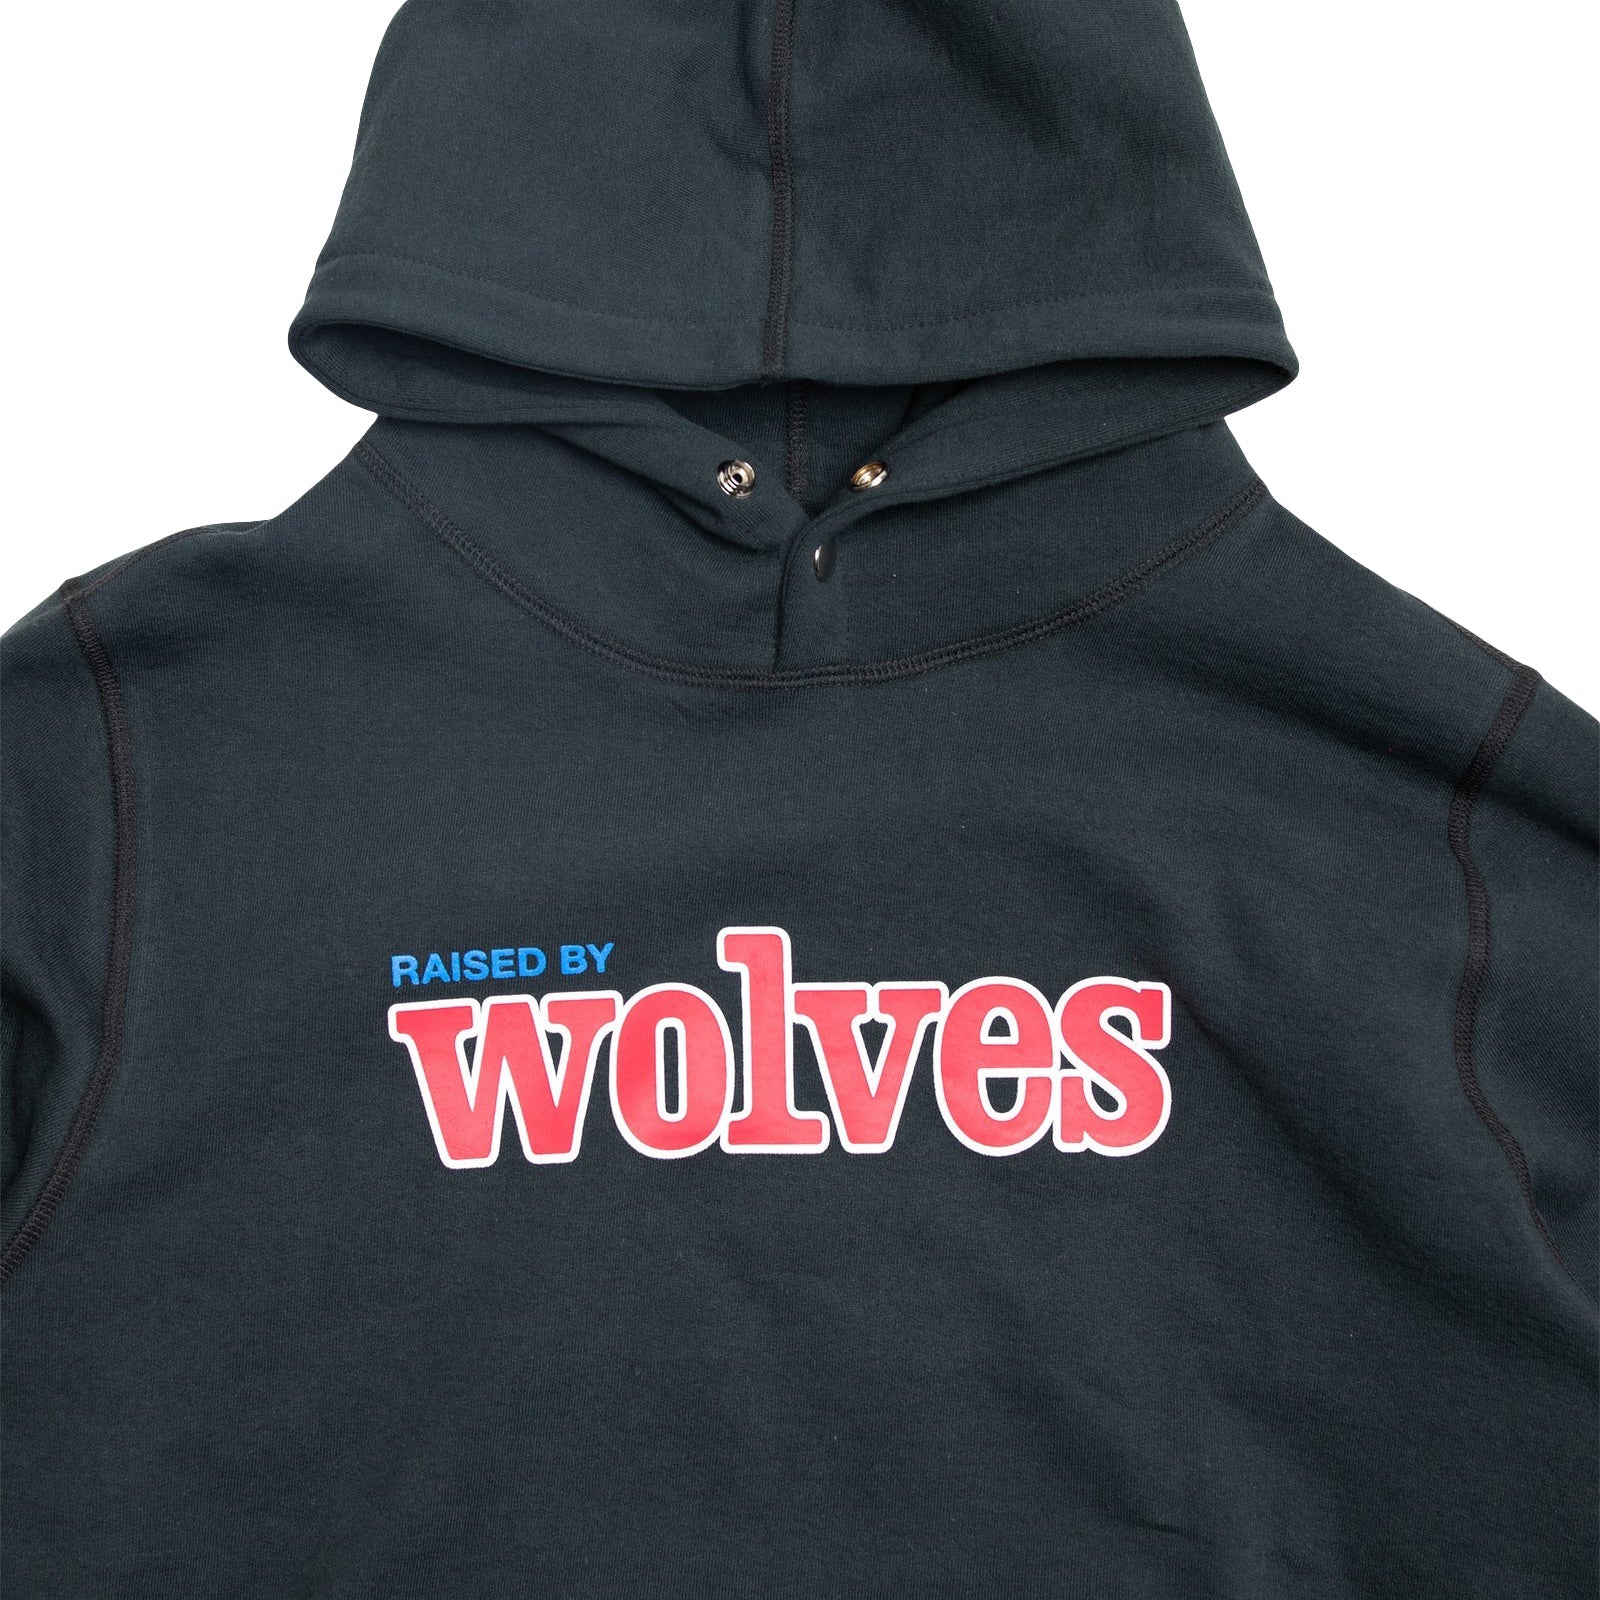 Raised By Wolves Team Lettering Snap Hoodie Black - SWEATERS - Canada